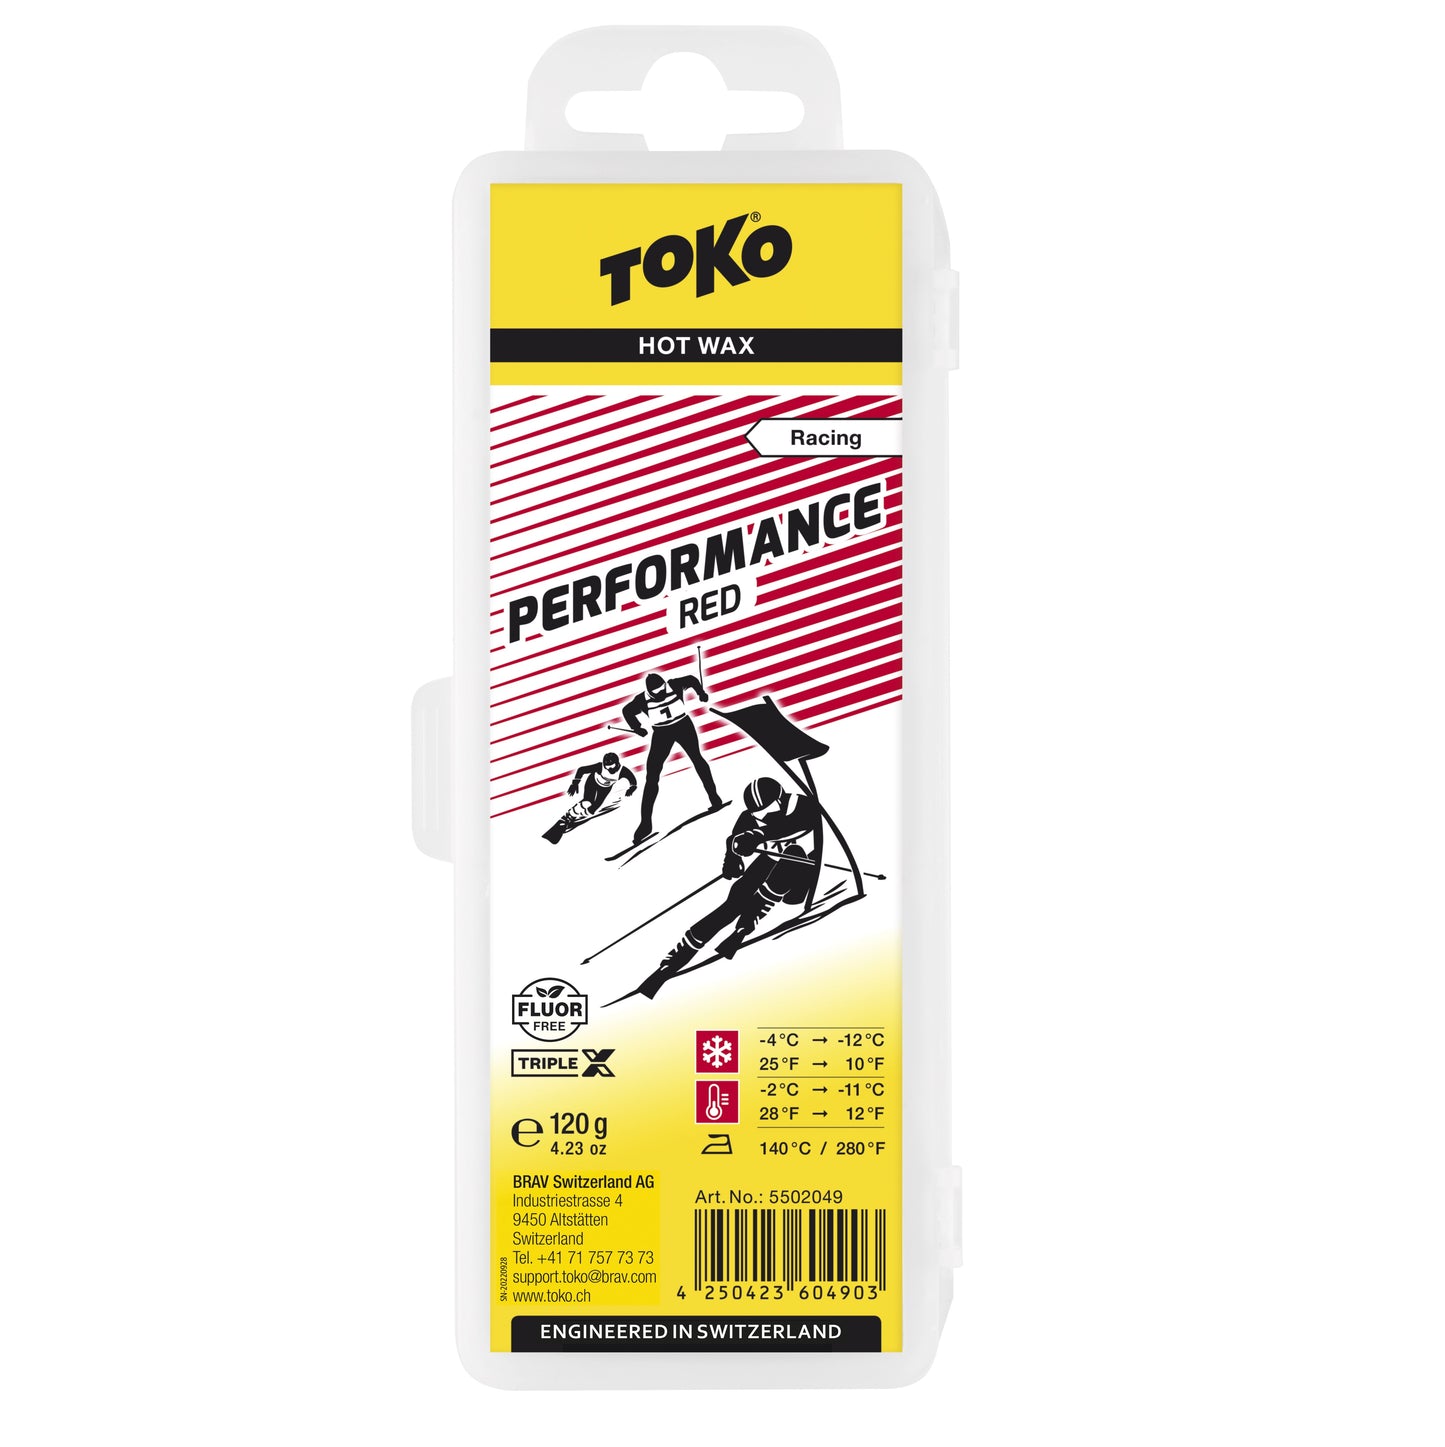 Toko vasks Performance Hot Wax red